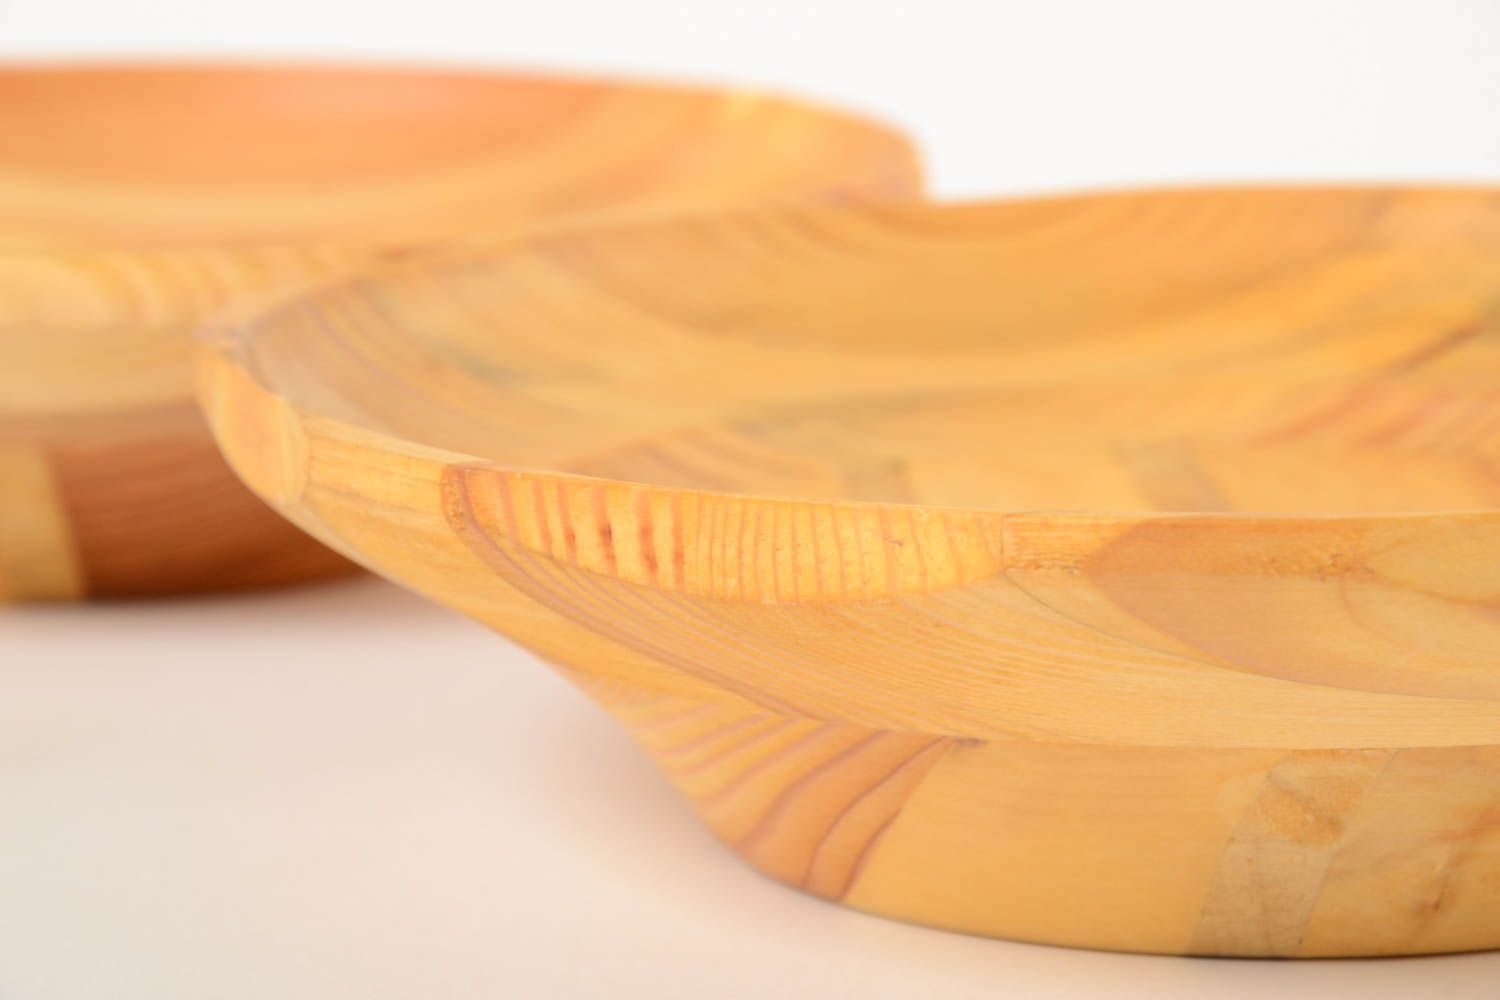 Handmade wooden plate design plate set 2 pieces wood craft kitchen supplies photo 3